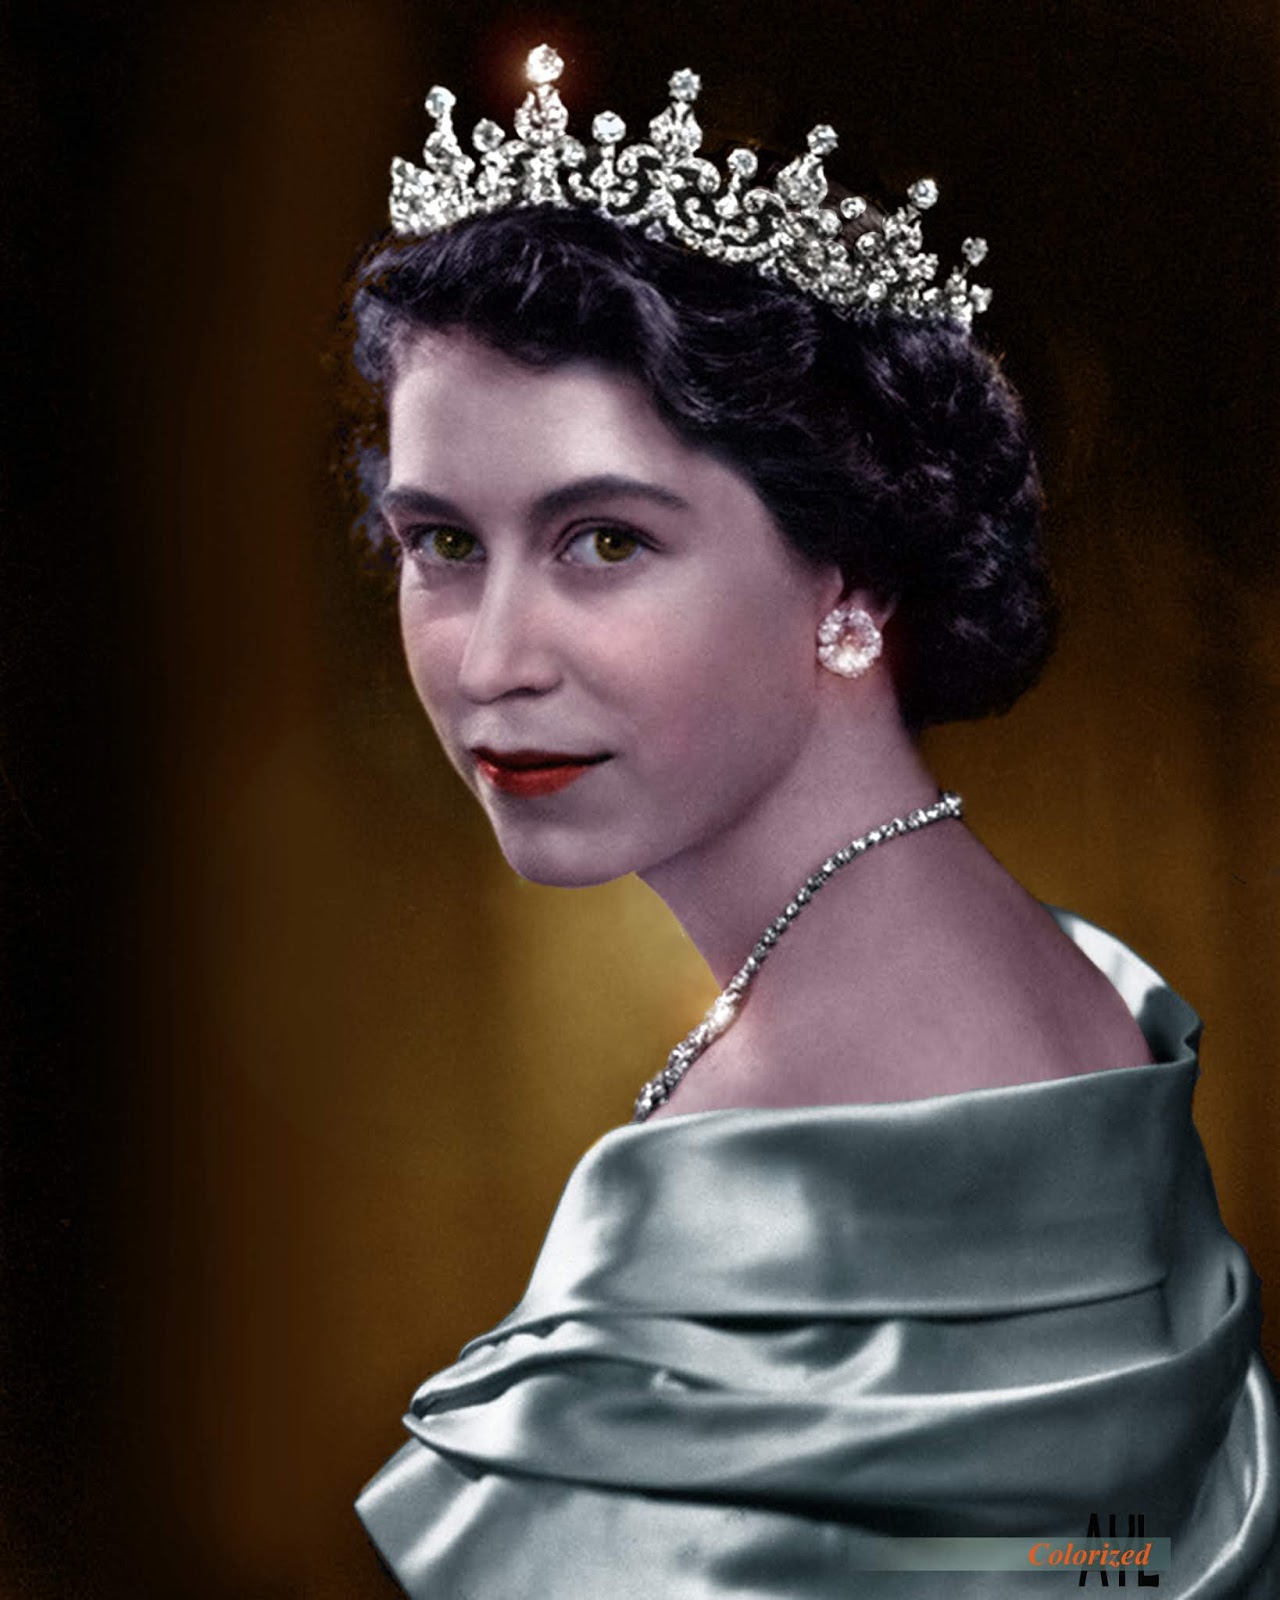 Colors for a Bygone Era: Queen Elizabeth II, 1951